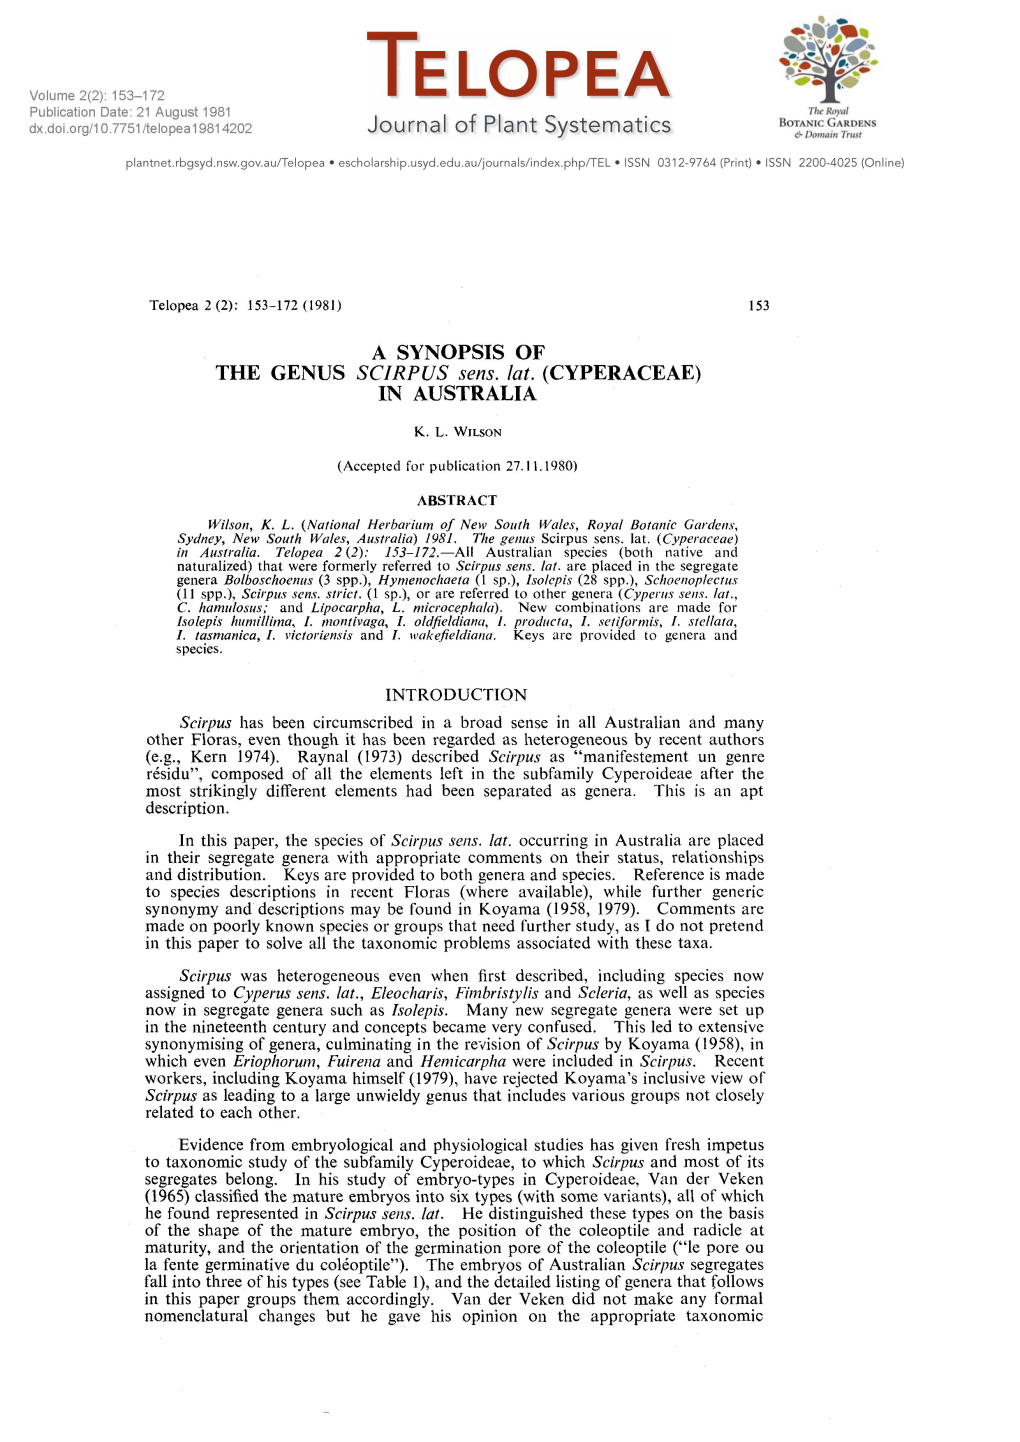 Telopea · Escholarship.Usyd.Edu.Au/Journals/Index.Php/TEL · ISSN 0312-9764 (Print) · ISSN 2200-4025 (Online)